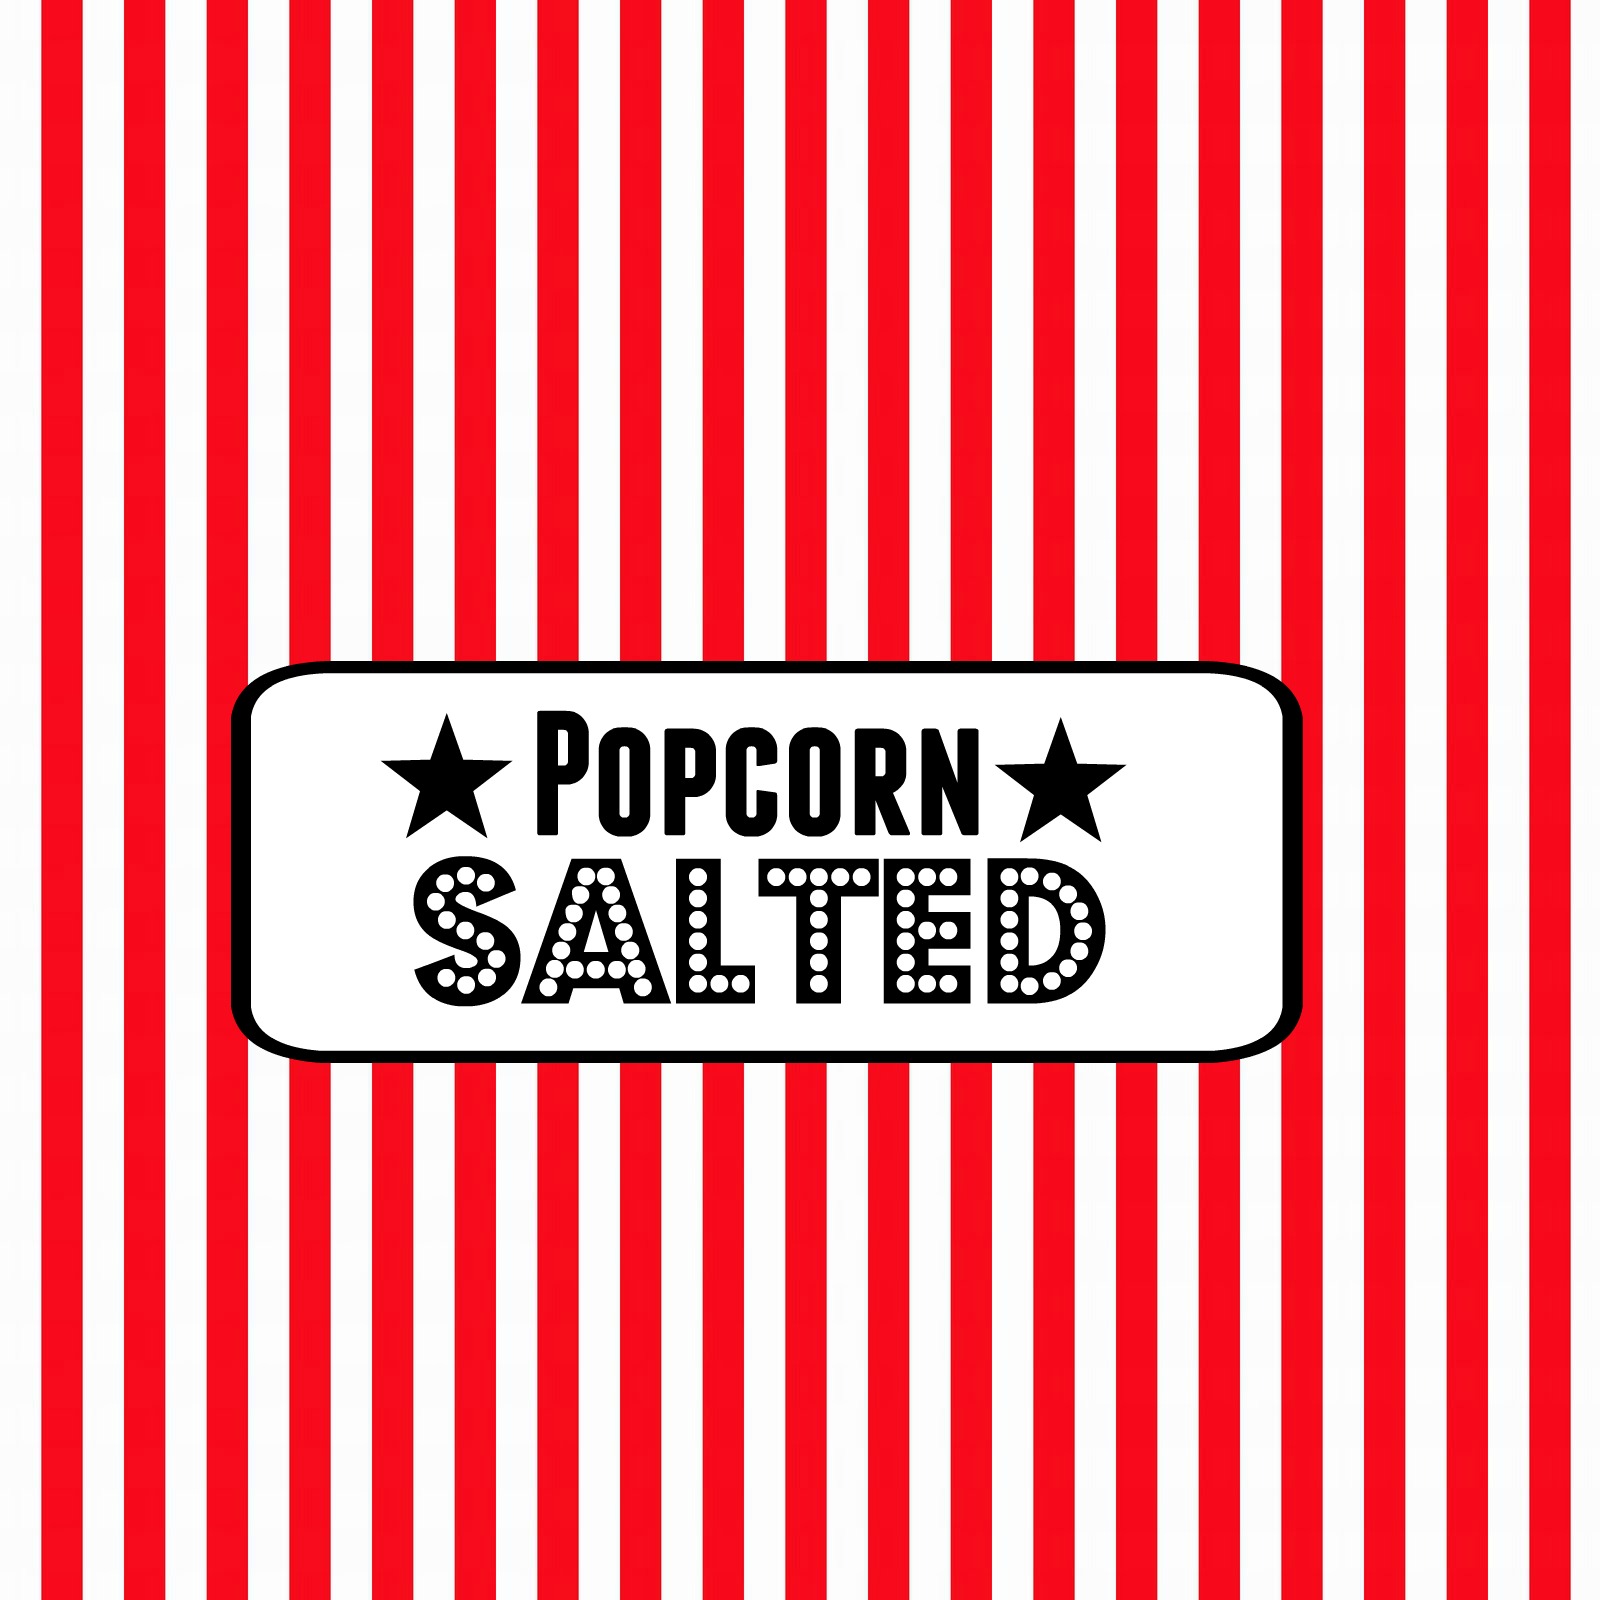 Popcorn Bar Movie Night Kid Birthday Free Printable Download Food Label Red White Stripe